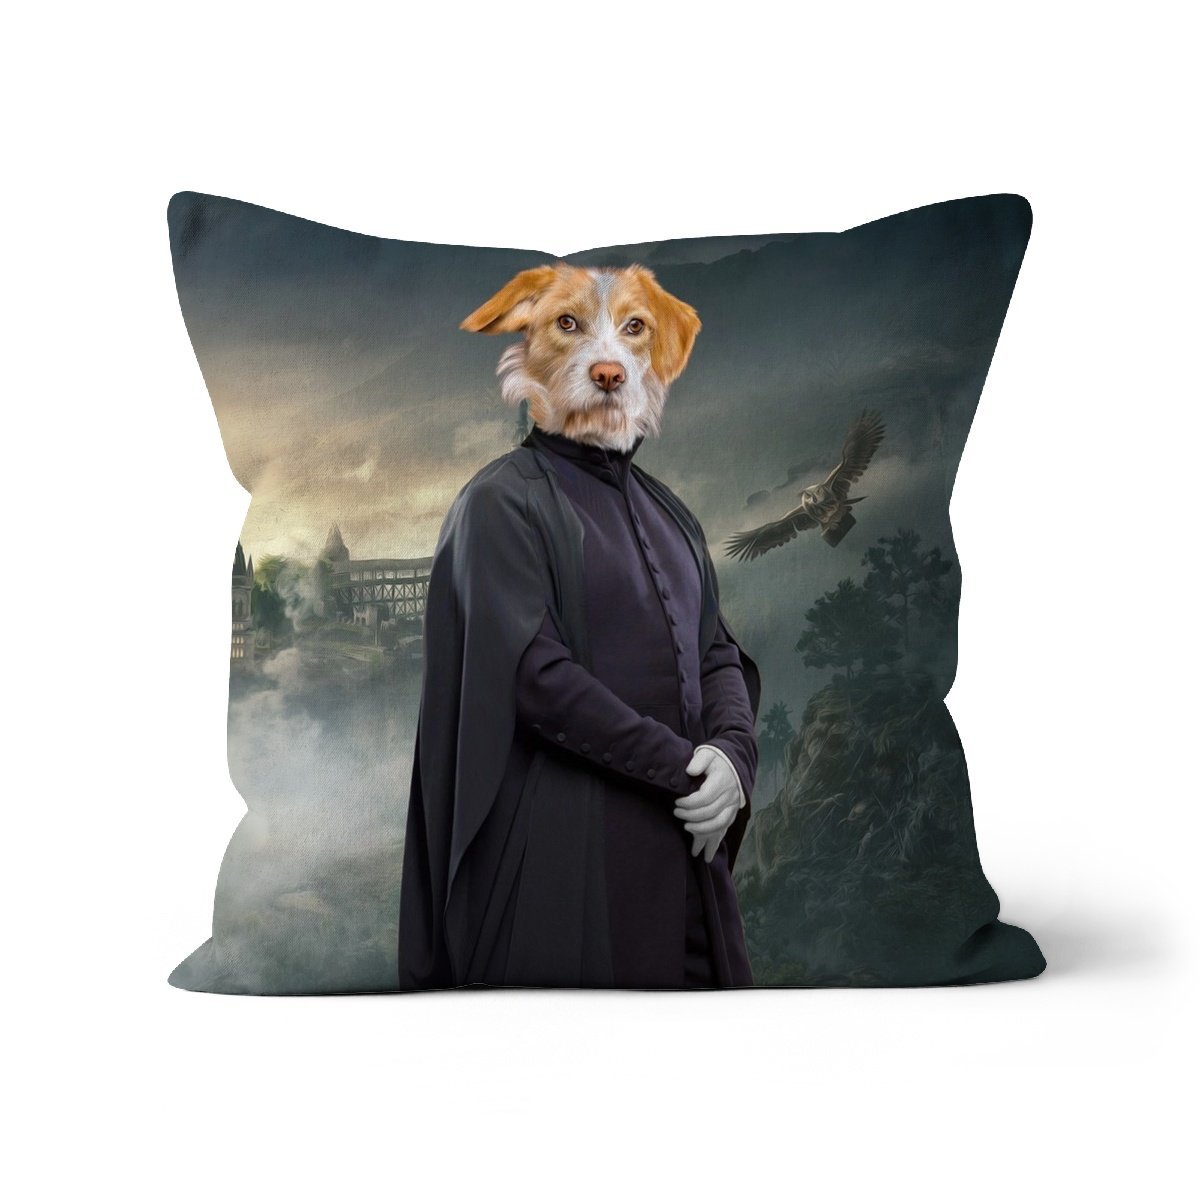 Professor Snape (Harry Potter Inspired): Custom Pet Cushion - Paw & Glory - #pet portraits# - #dog portraits# - #pet portraits uk#paw and glory, custom pet portrait cushion,pillows of your dog, dog on pillow, photo pet pillow, custom pillow of pet, dog personalized pillow